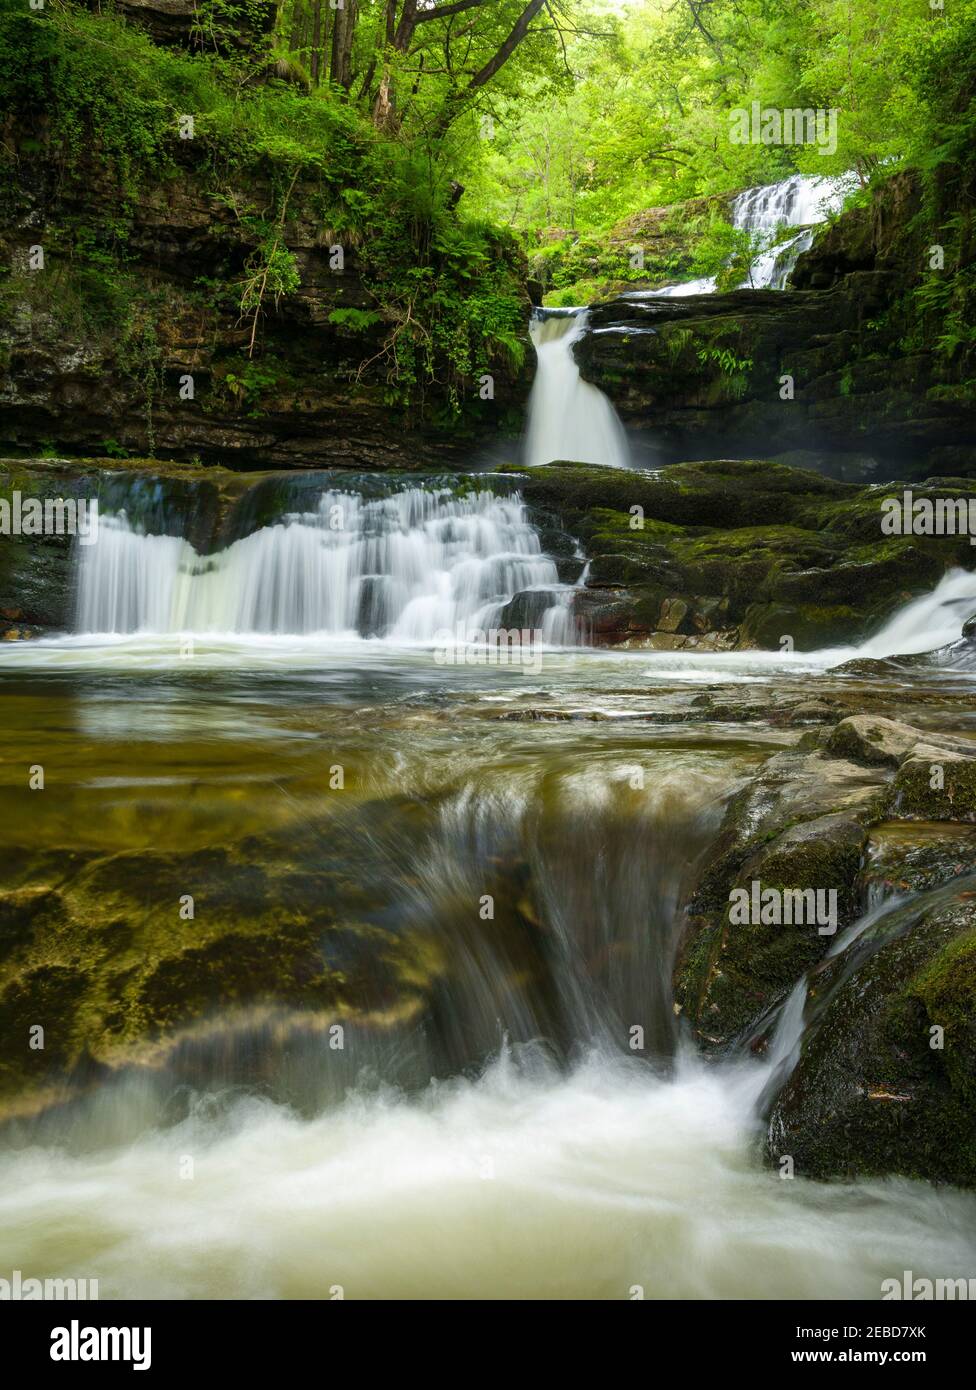 Sgwd Isaf Clun-gwyn (Lower Fall of the White Meadow) waterfall on the Afon Mellte river in the Bannau Brycheiniog (Brecon Beacons) National Park near Ystradfellte, Powys, Wales. Stock Photo